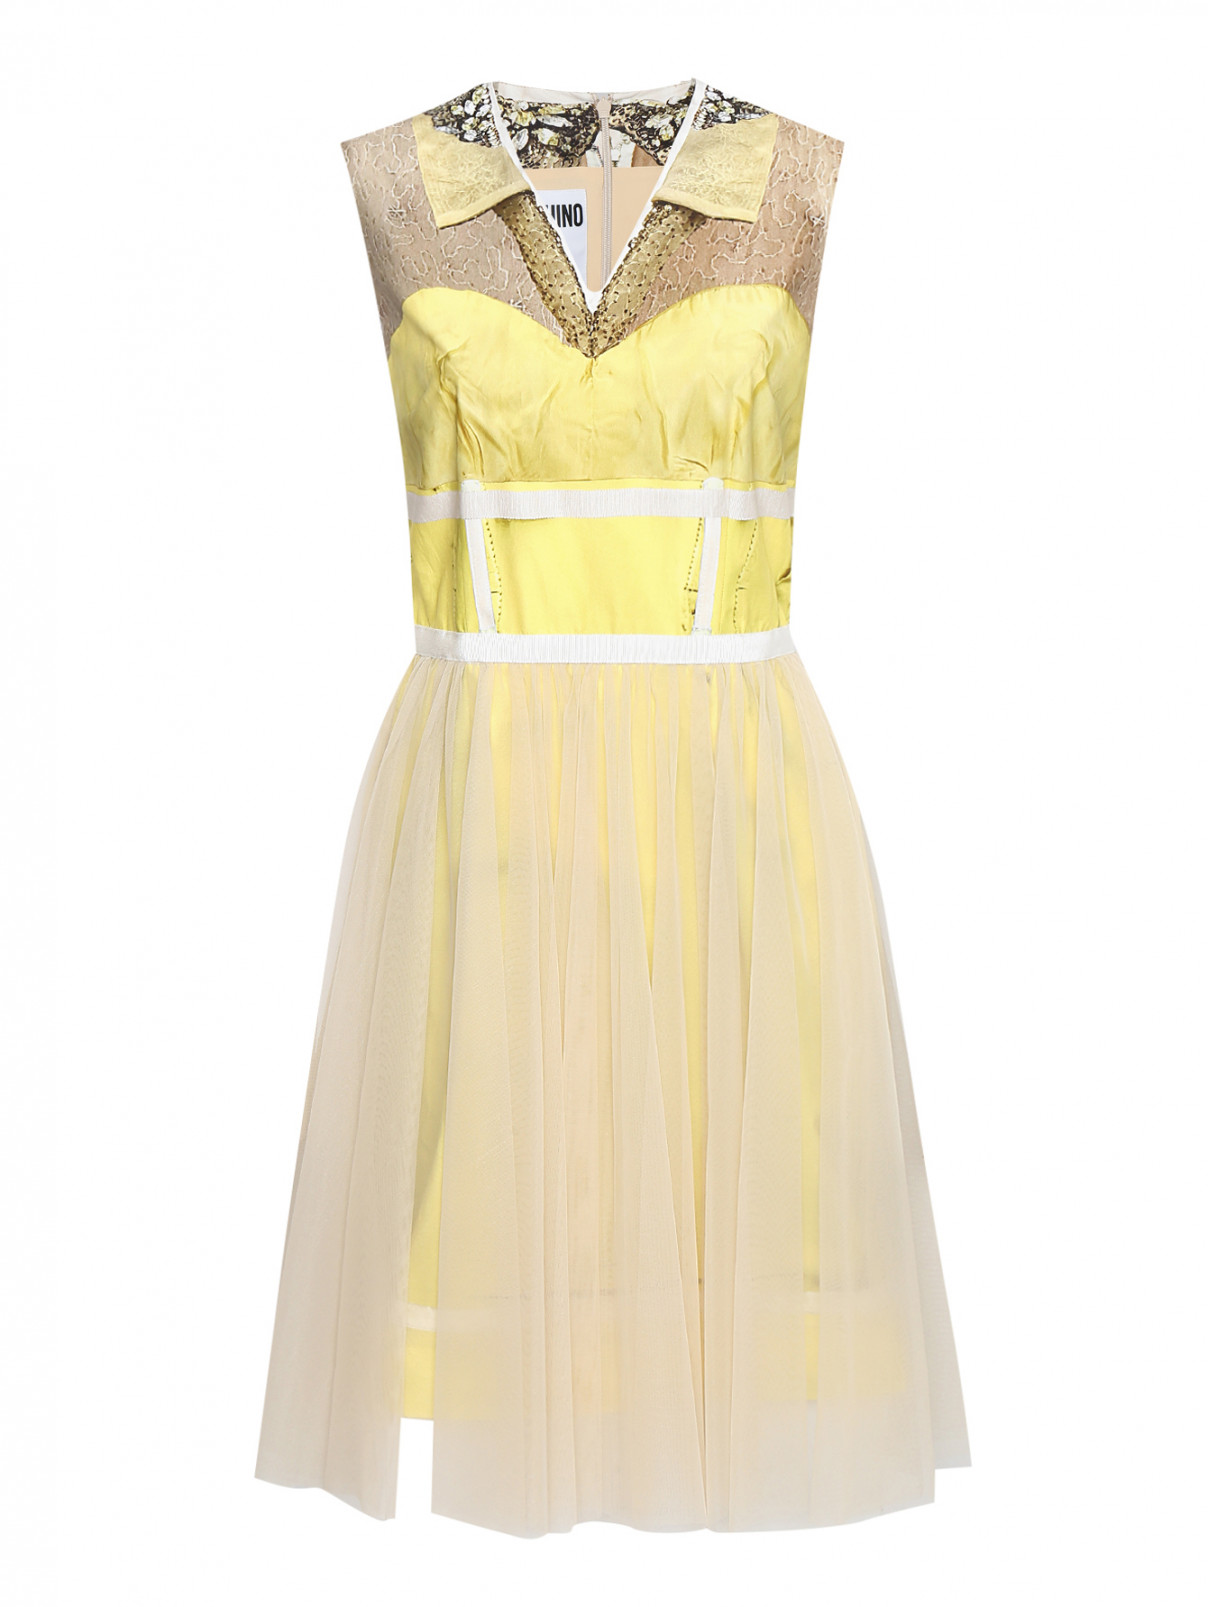 Платье из хлопка с узором Moschino  –  Общий вид  – Цвет:  Желтый